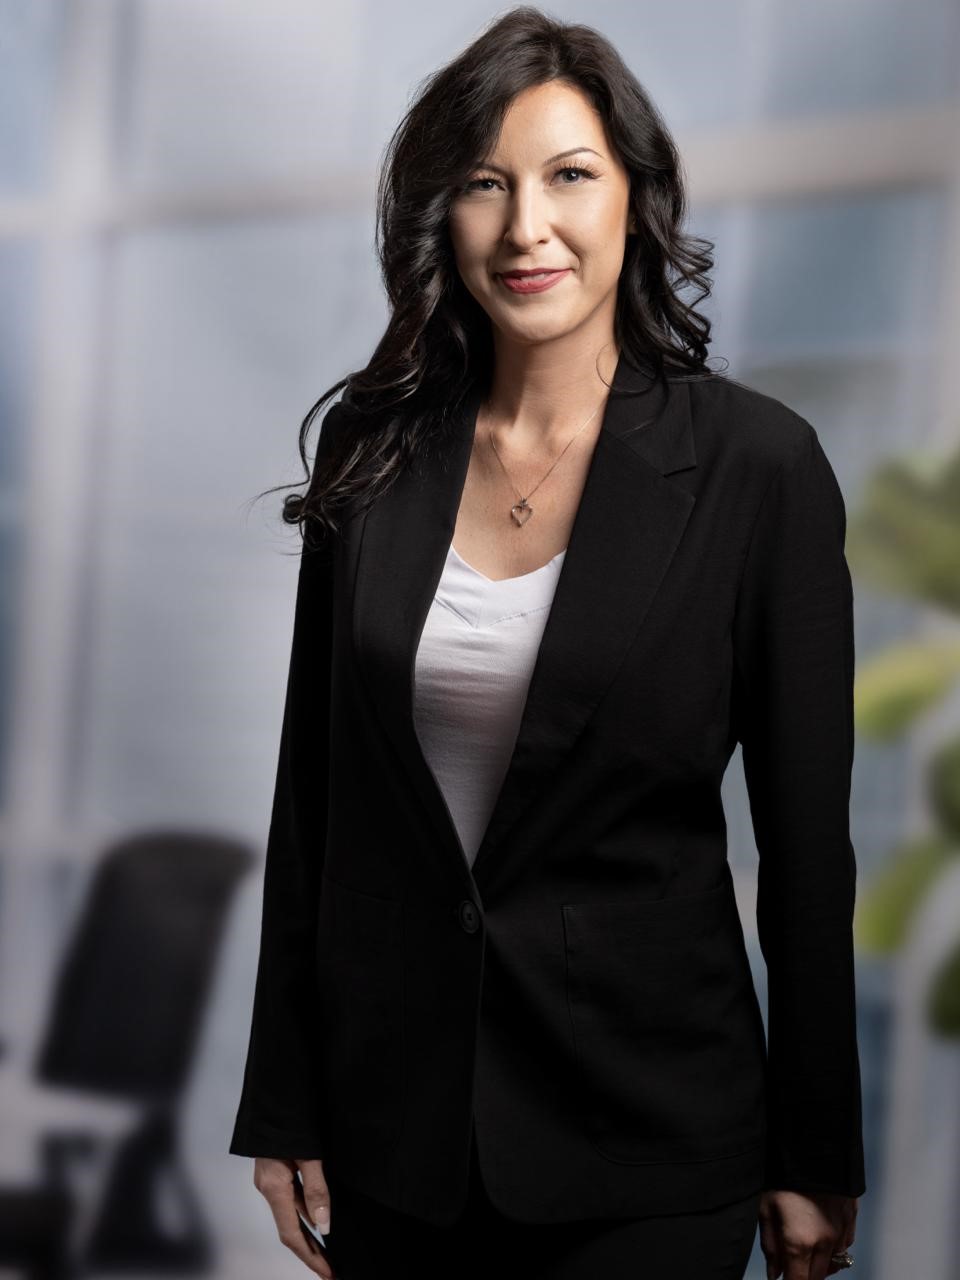 Danielle Cardenas, Associate Broker